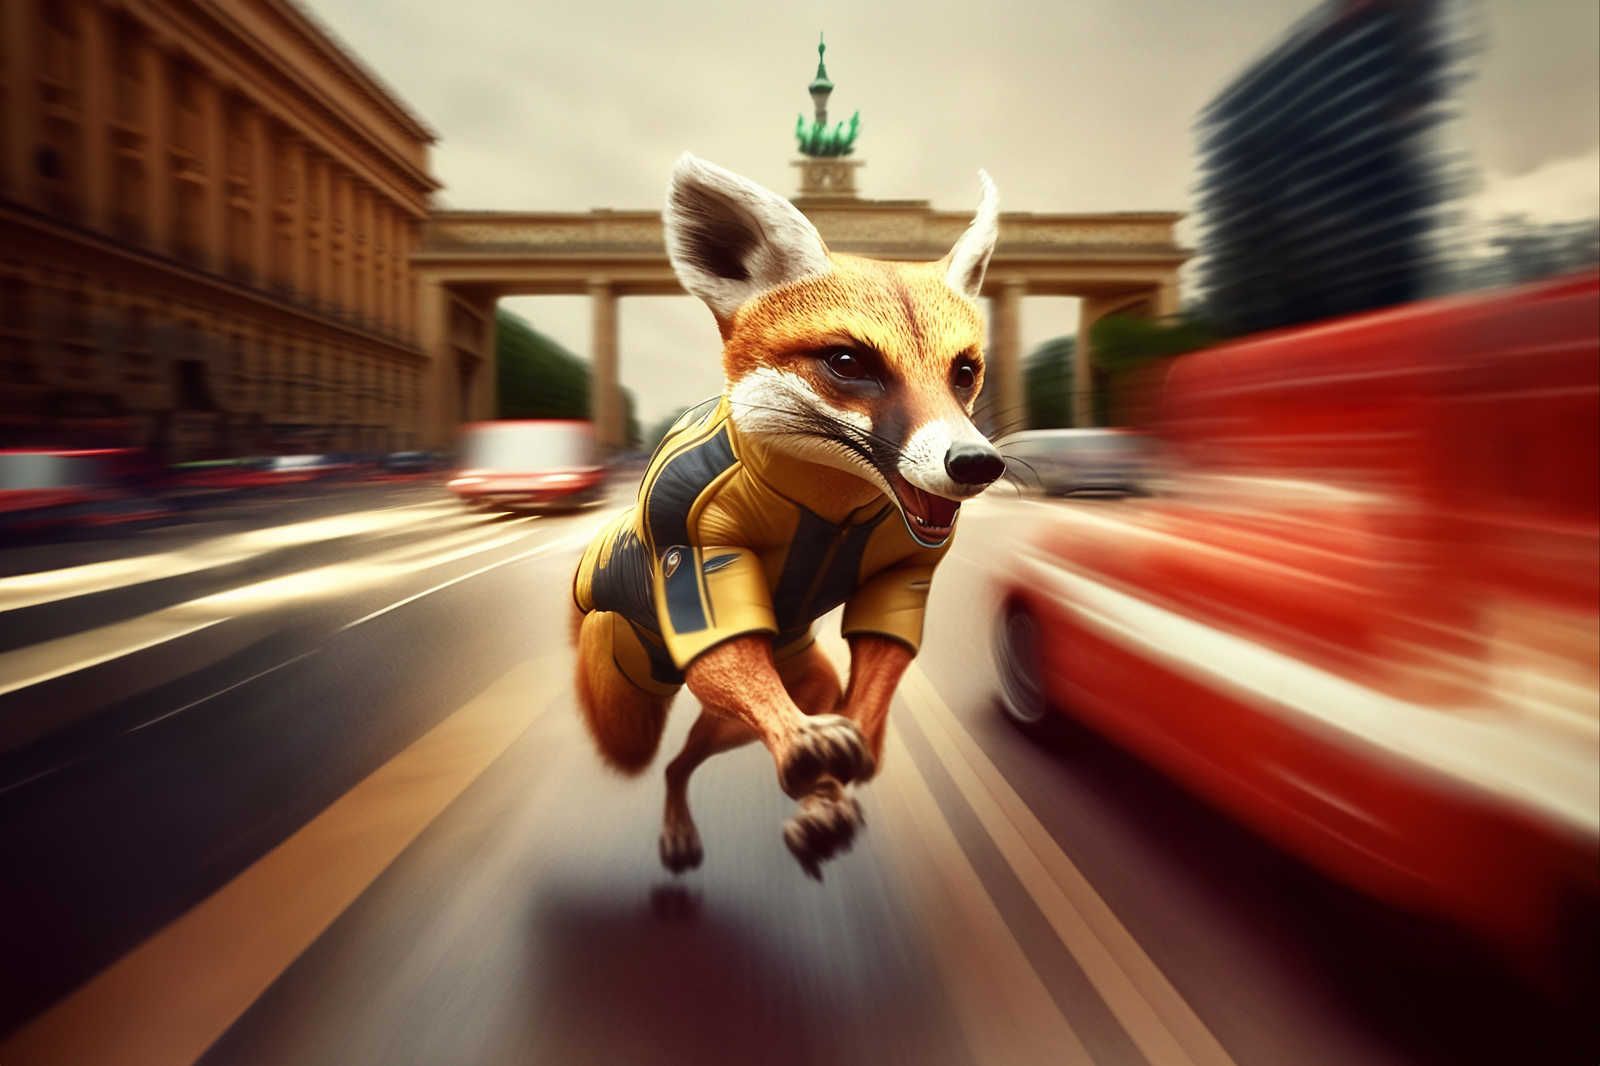             KI-Leinwandbild »fast fox« – 90 cm x 60 cm
        